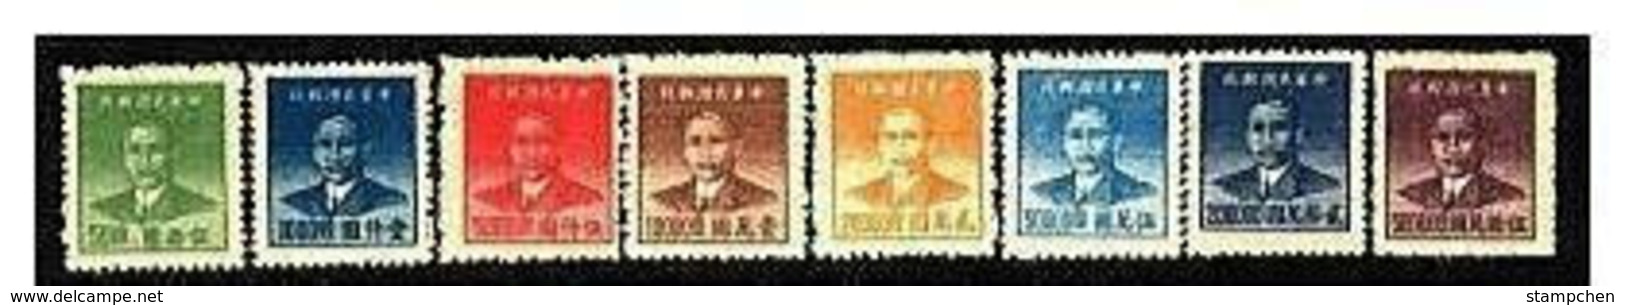 Rep China 1949 Sun Yat-sen Gold Yuan Hwa Nan Print Stamps D62 SYS - Unused Stamps